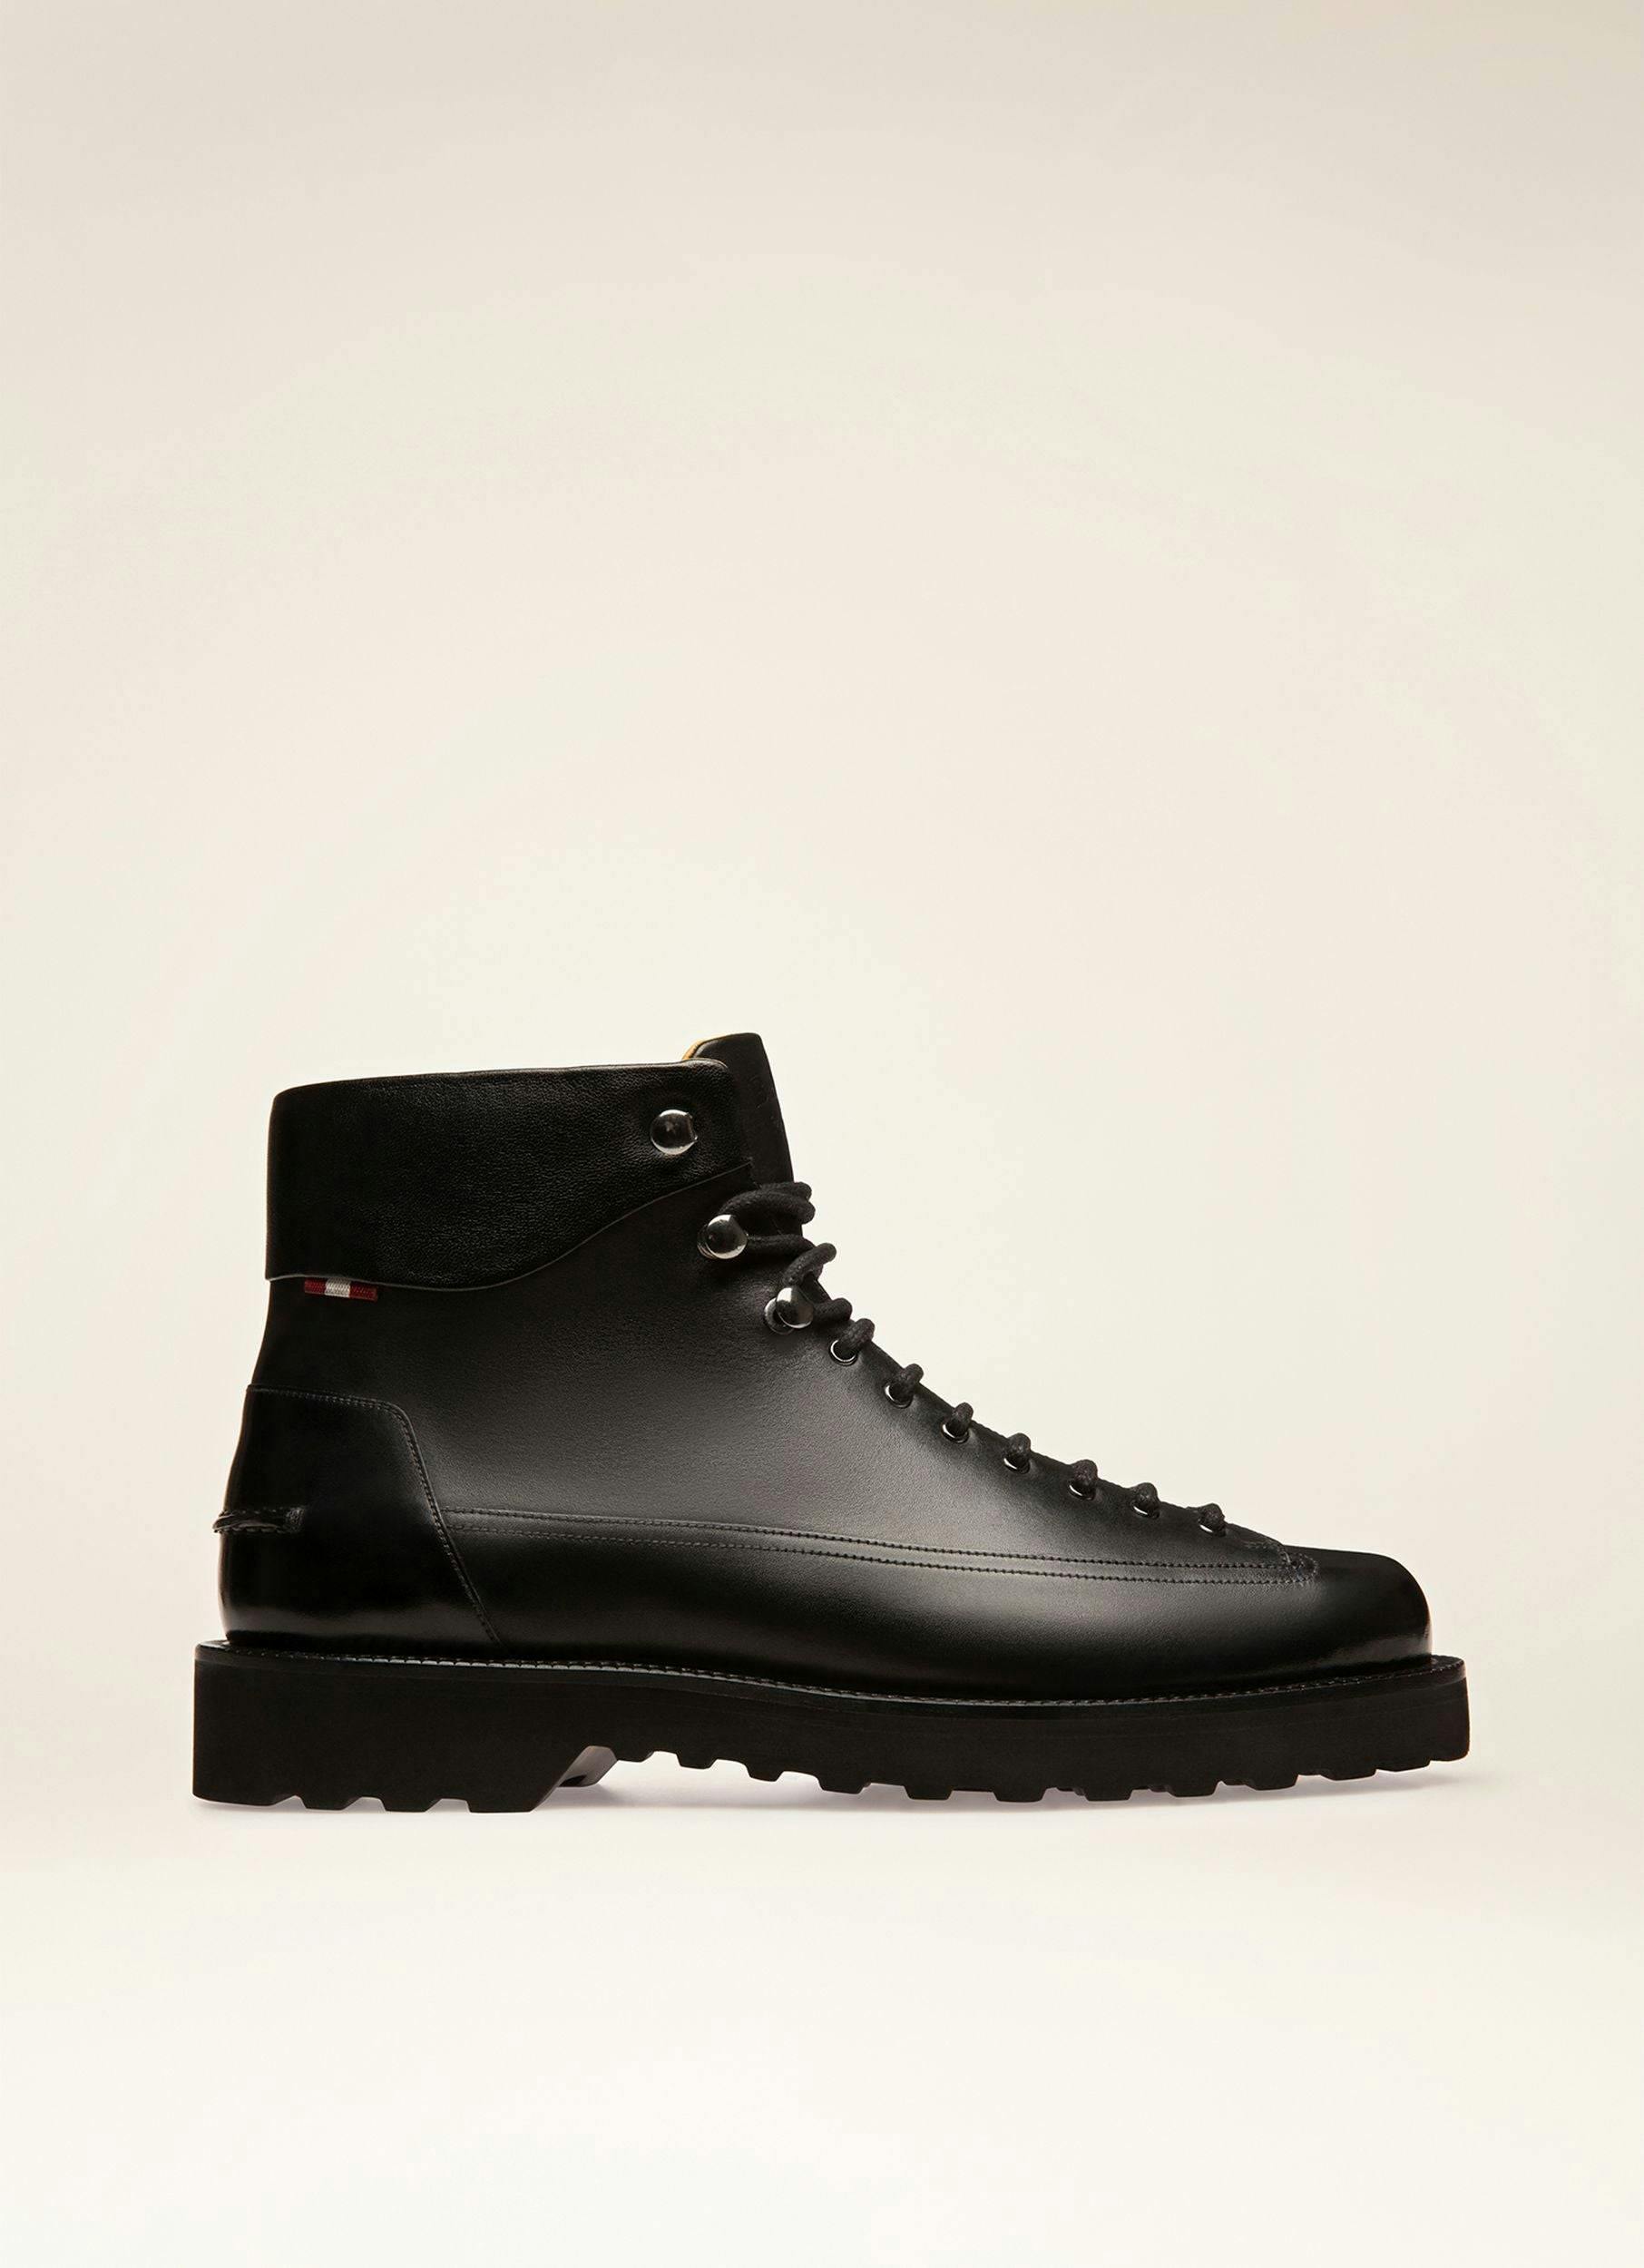 NOTTINGHAM Leather Boots In Black - Men's - Bally - 01